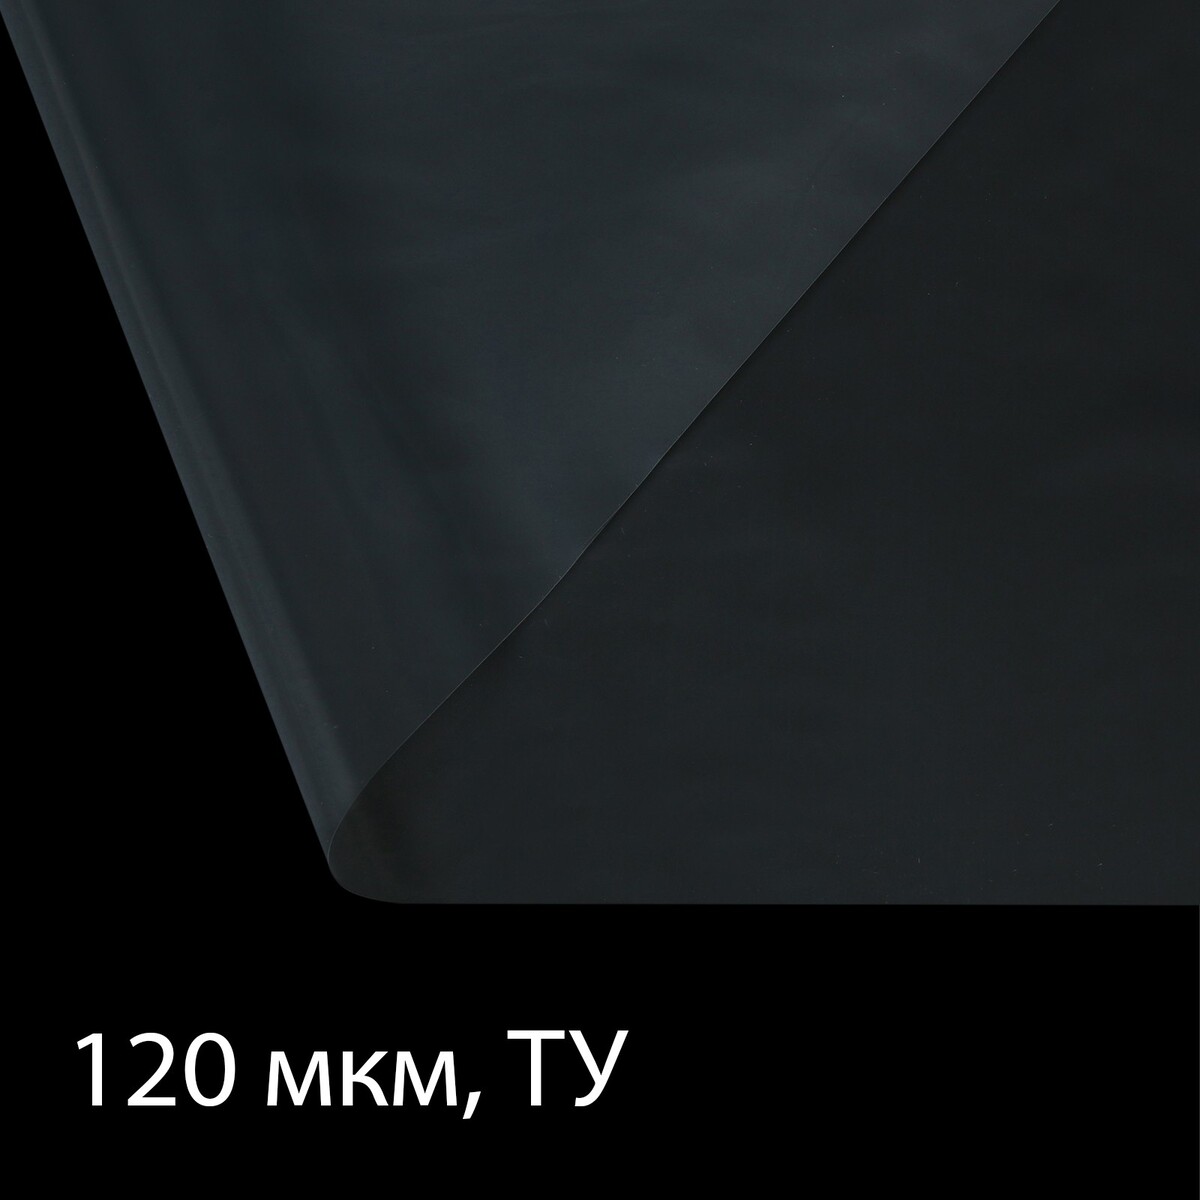 Пленка полиэтиленовая 120 мкм, прозрачная, длина 10 м, ширина 3 м, рукав (1.5 м × 2), эконом 50% пленка полиэтиленовая толщина 200 мкм прозрачная 10 × 3 м рукав 1 5 м × 2 эконом 50%